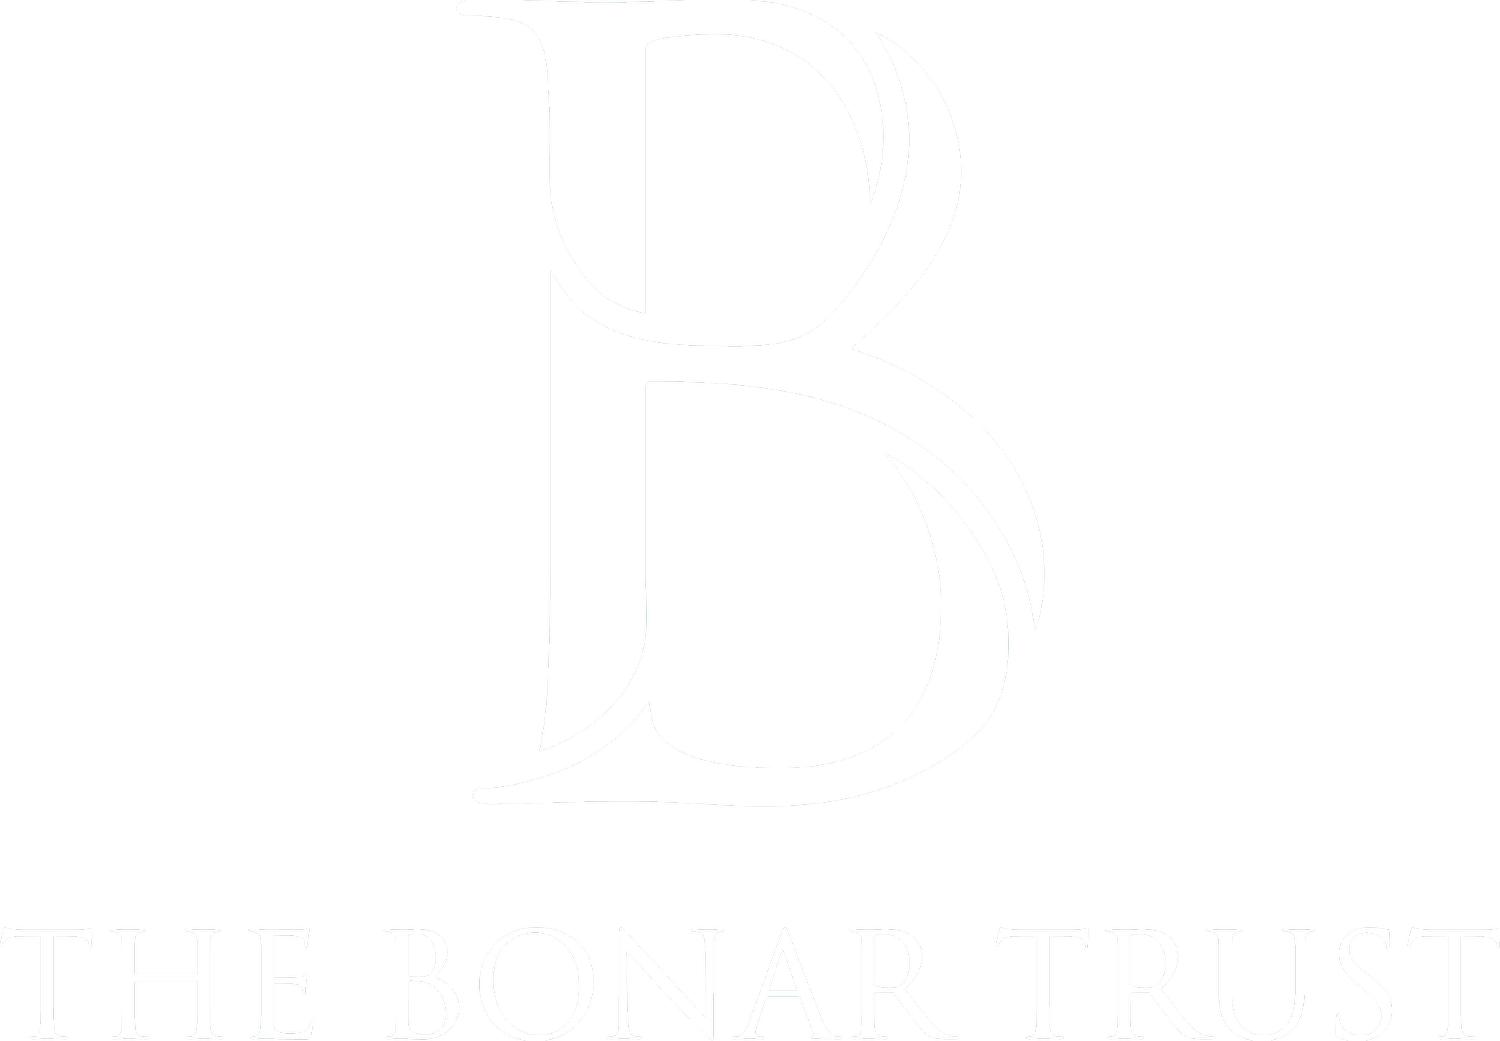 The Bonar Trust